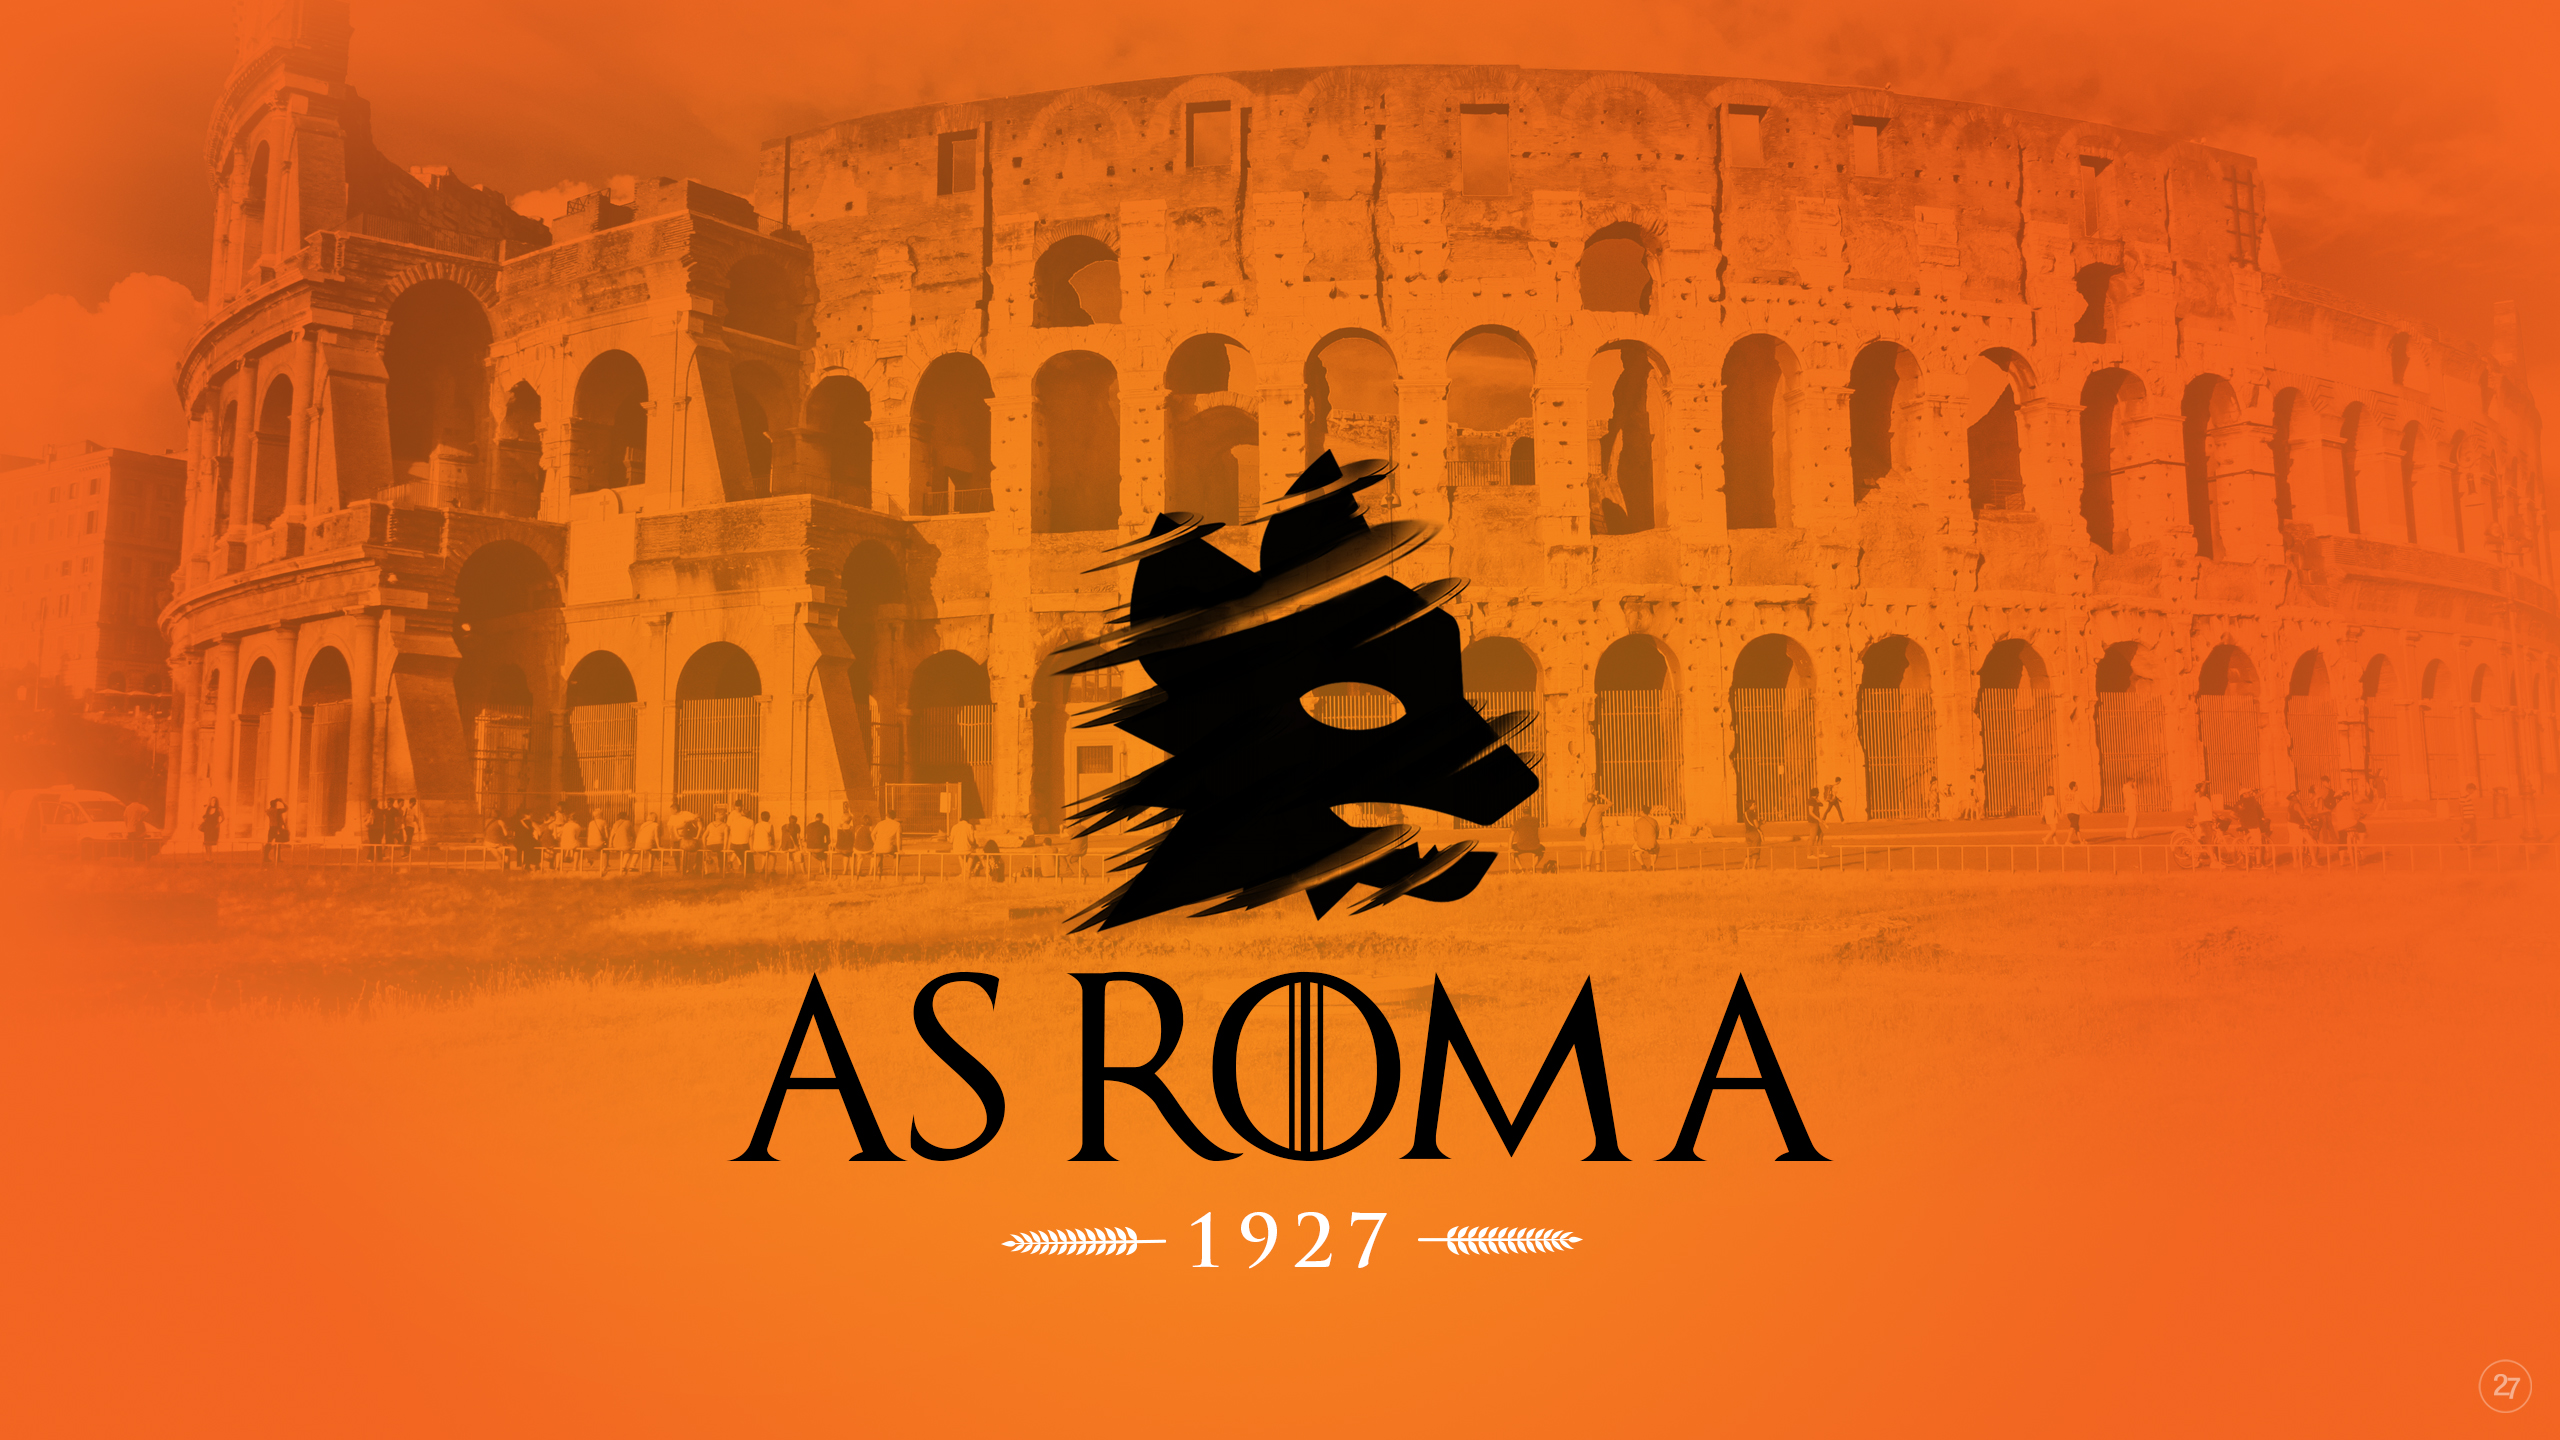 504702 descargar imagen como roma, deporte, emblema, logo, fútbol: fondos de pantalla y protectores de pantalla gratis